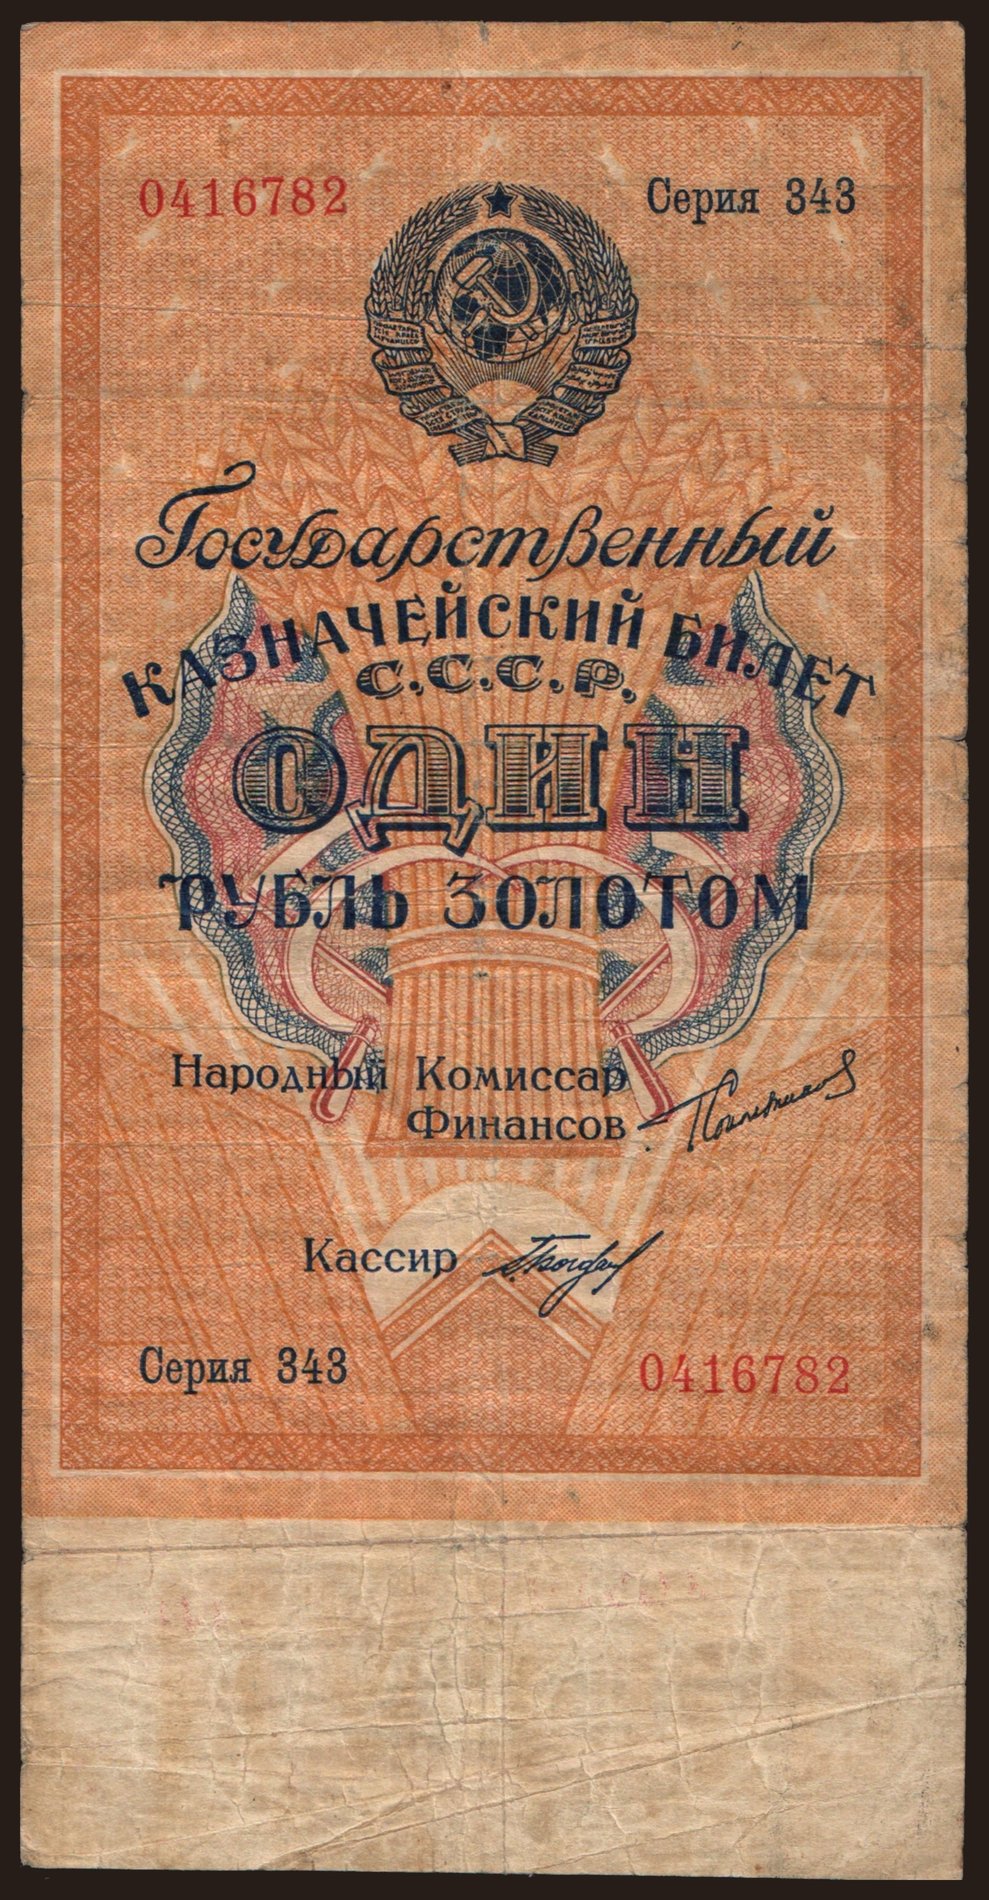 1 rubel, 1924